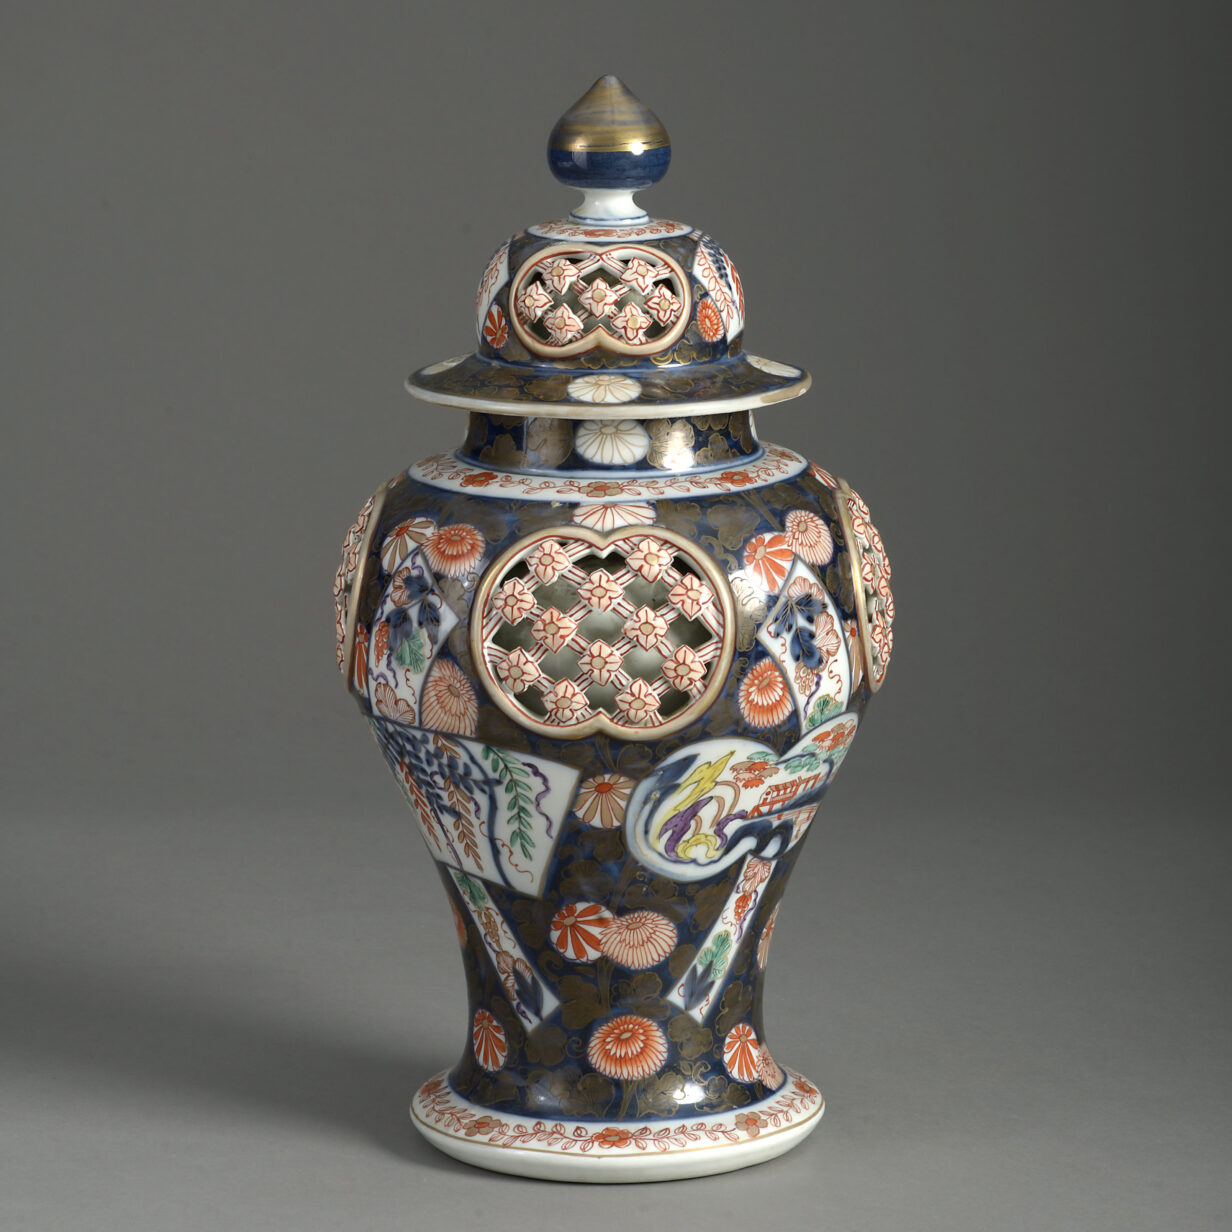 19th century samson imari porcelain vase